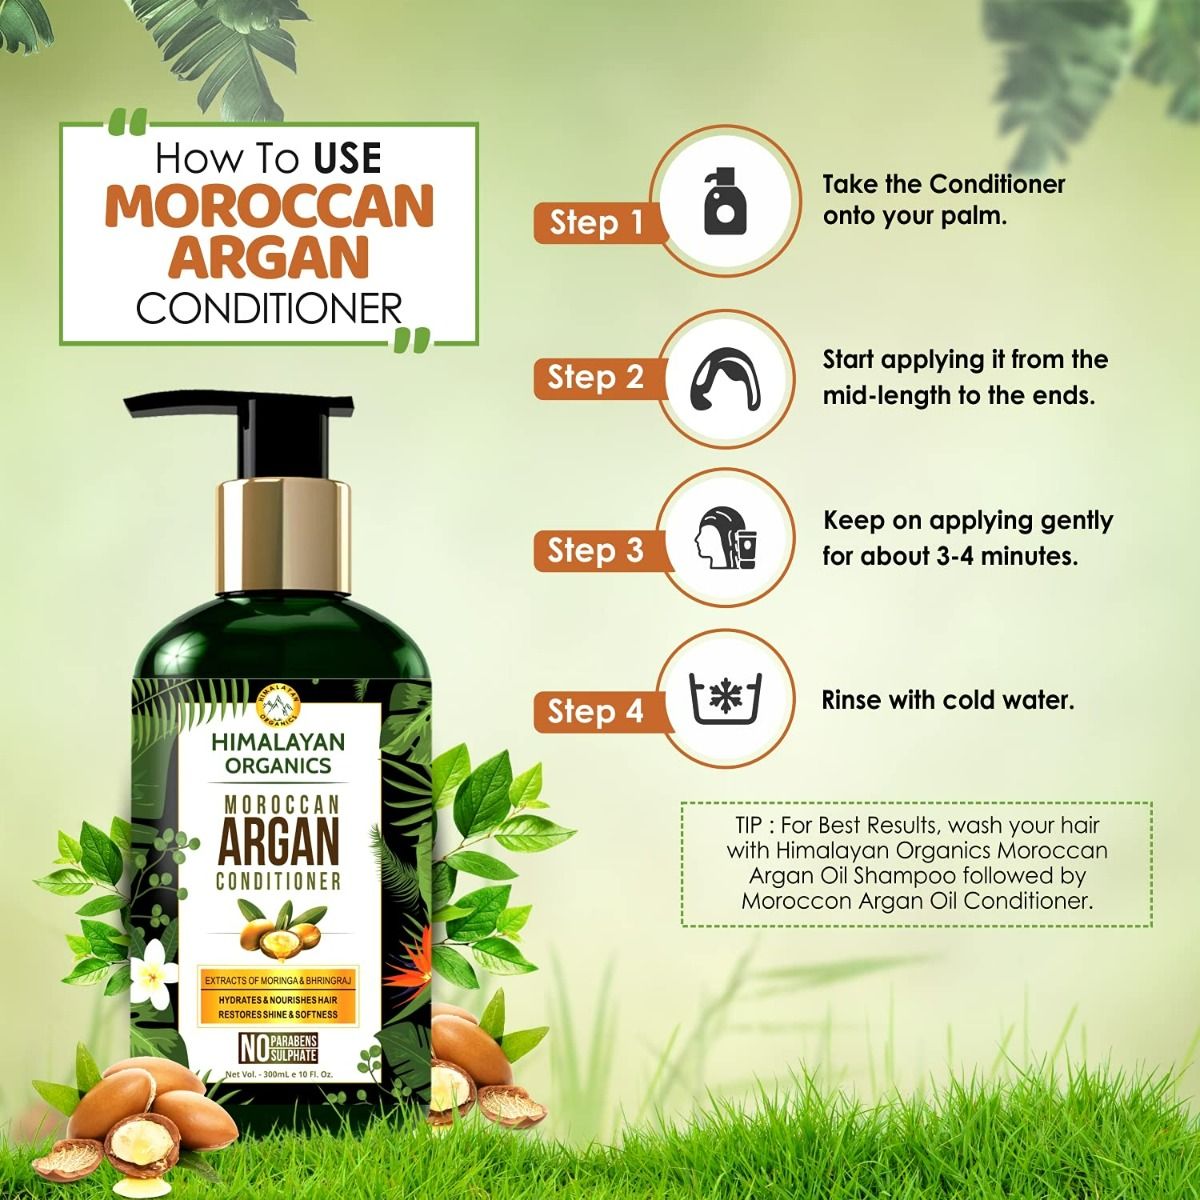 Himalayan Organics Moroccan Argan Oil Conditioner, 300 ml, Pack of 1 